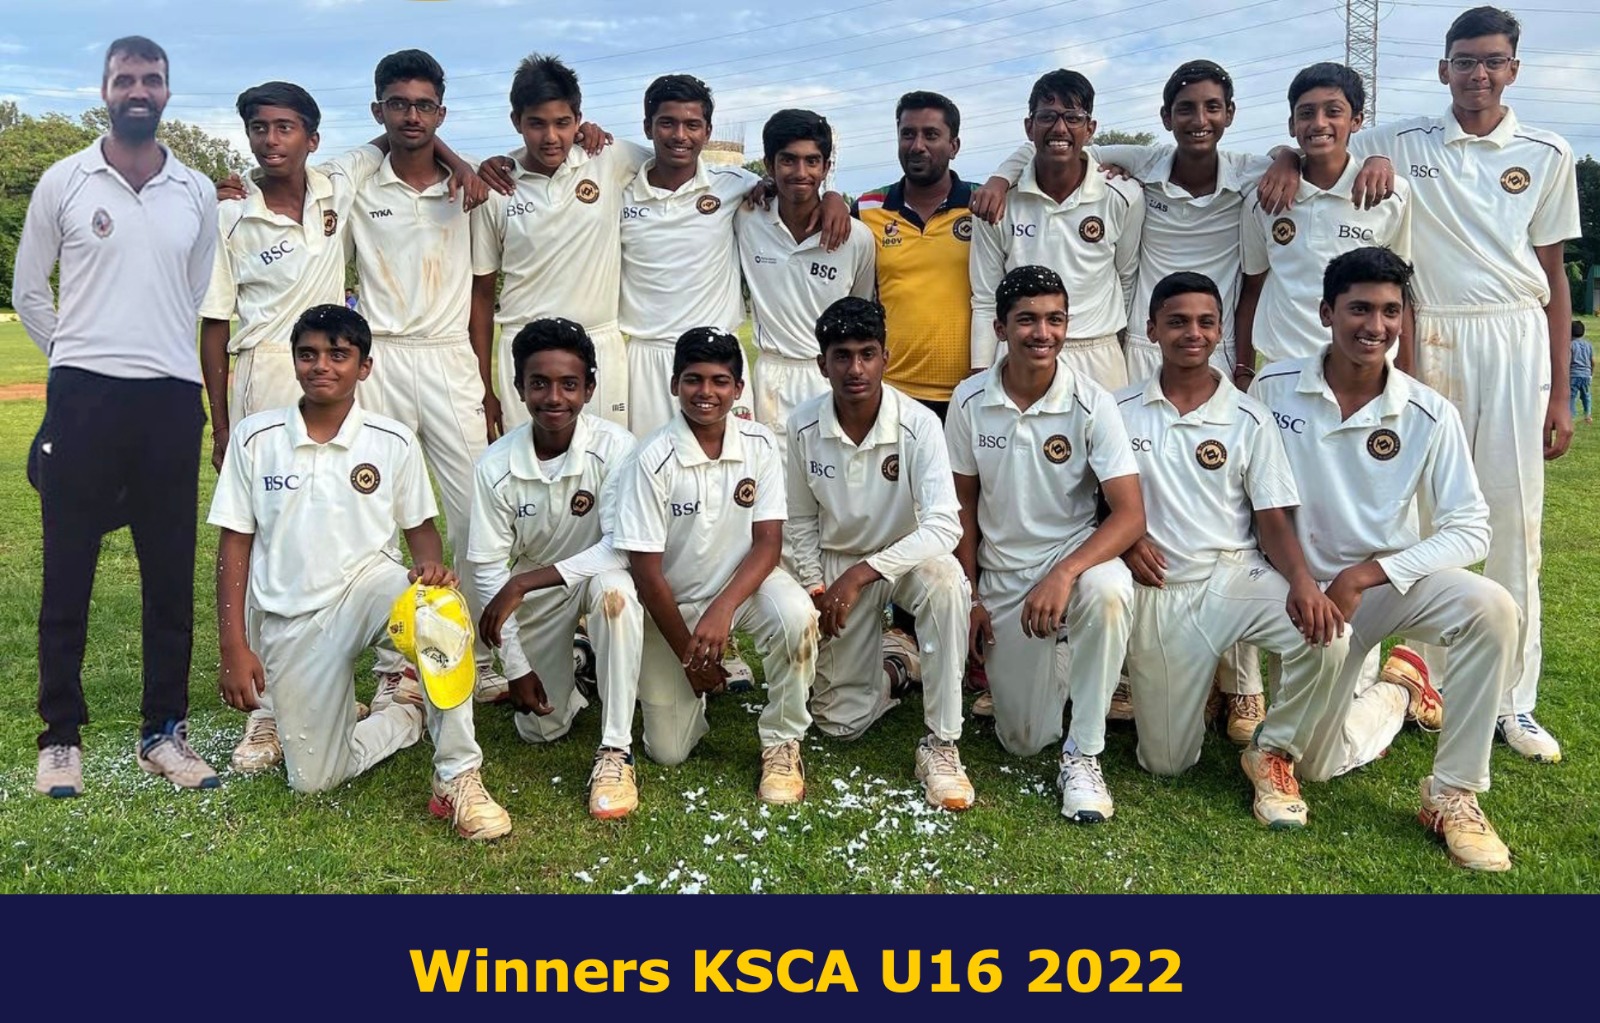 Winners KSCA U16 2022 image